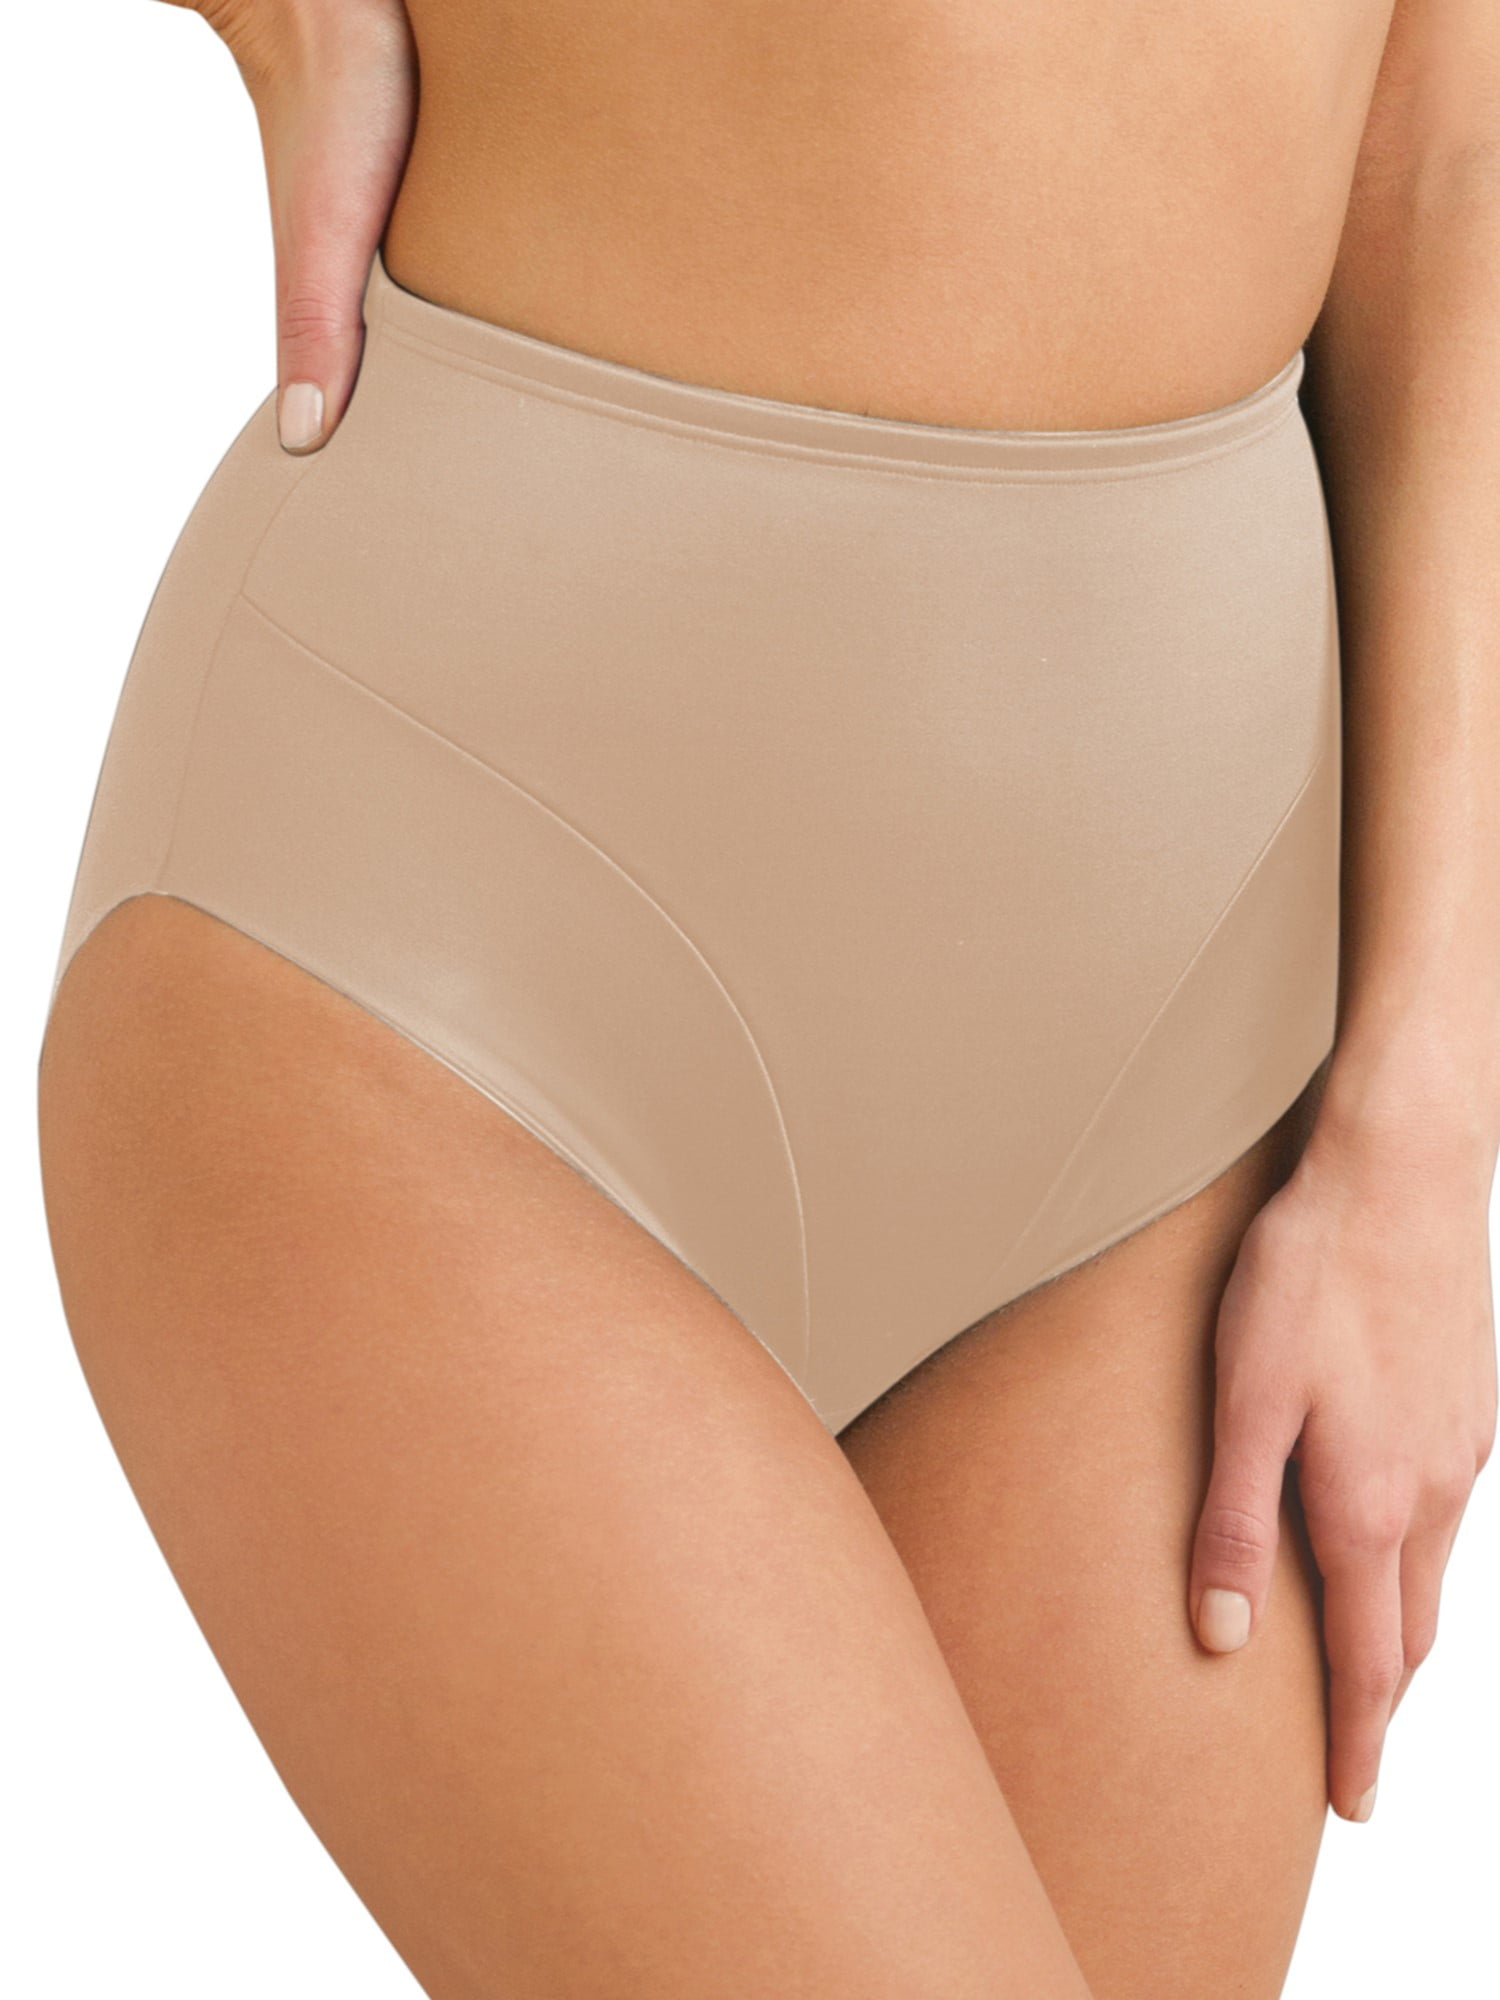 women's body underwear contain light stomach reinforcement white black made  in i